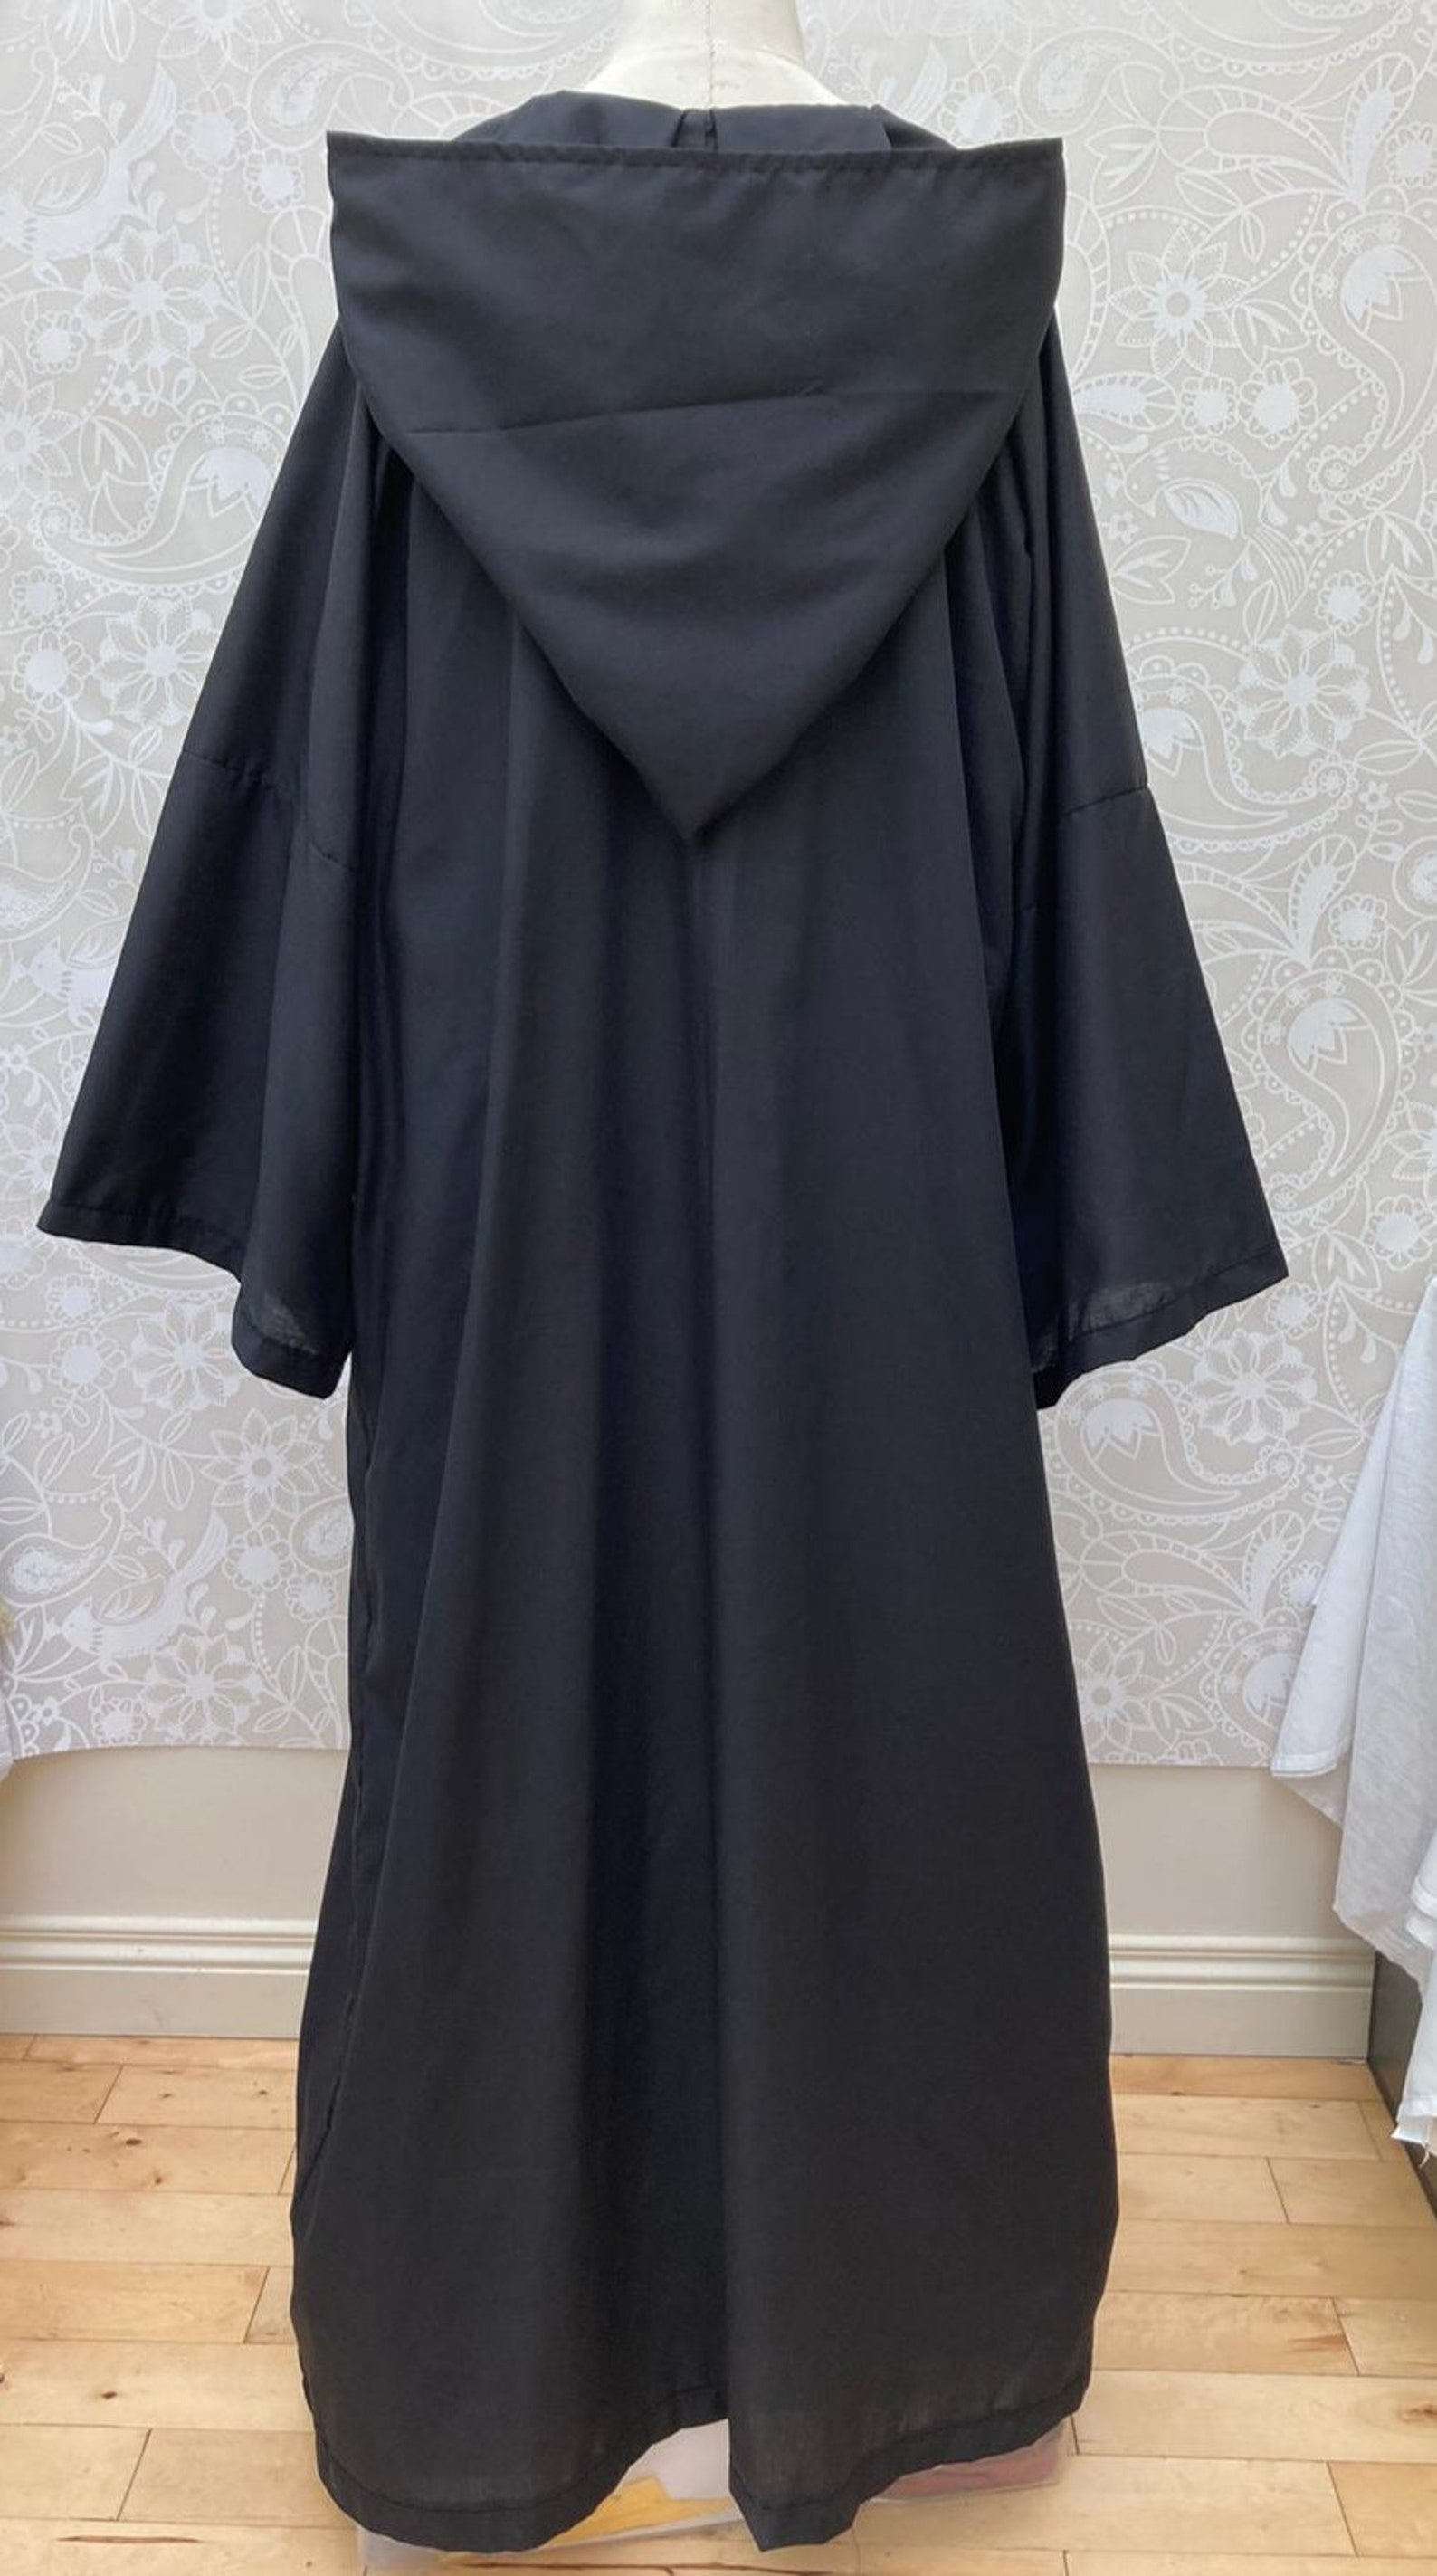 An open Tau HOODED Robe/cloak/ Ritual /Golden | Etsy